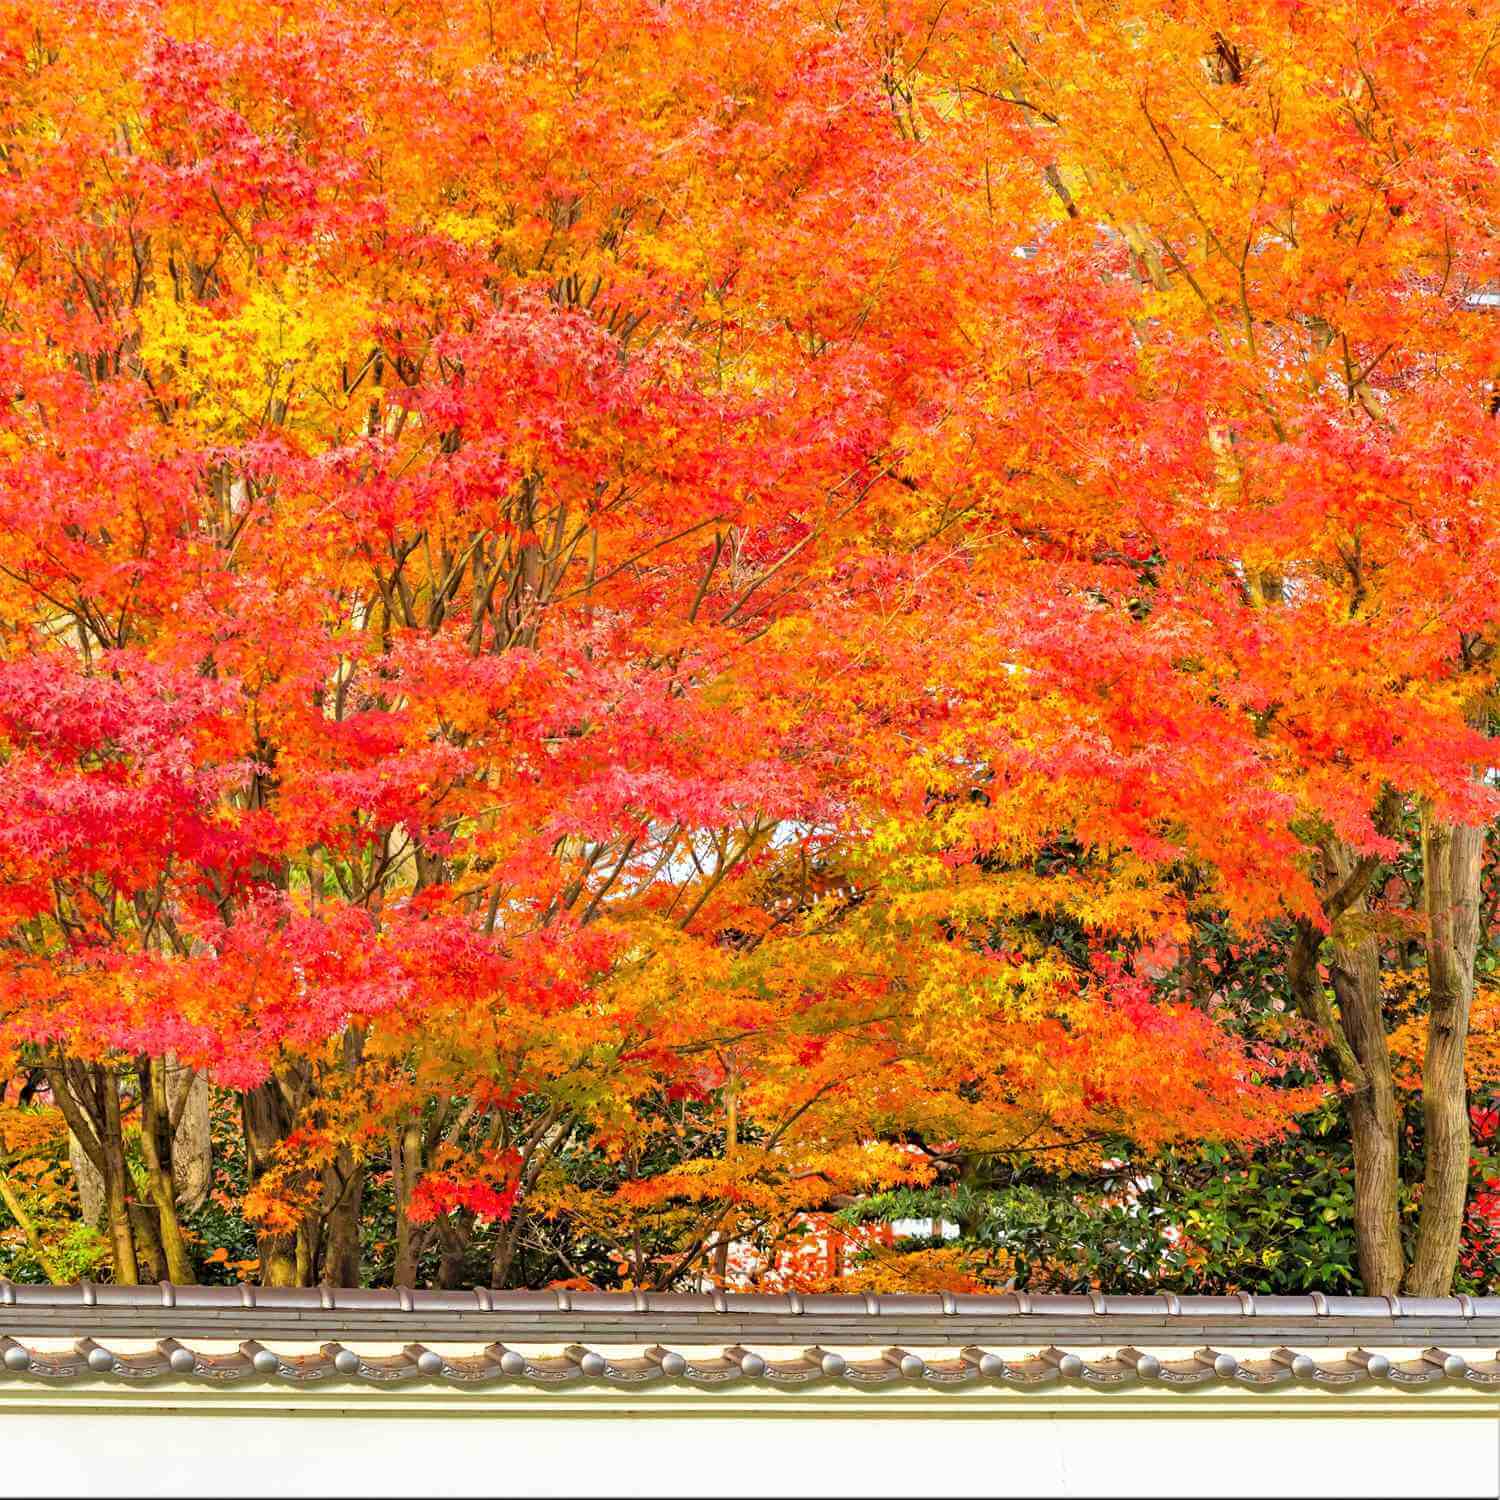 Autumn Leaves in Kyoto = AdobeStock 2